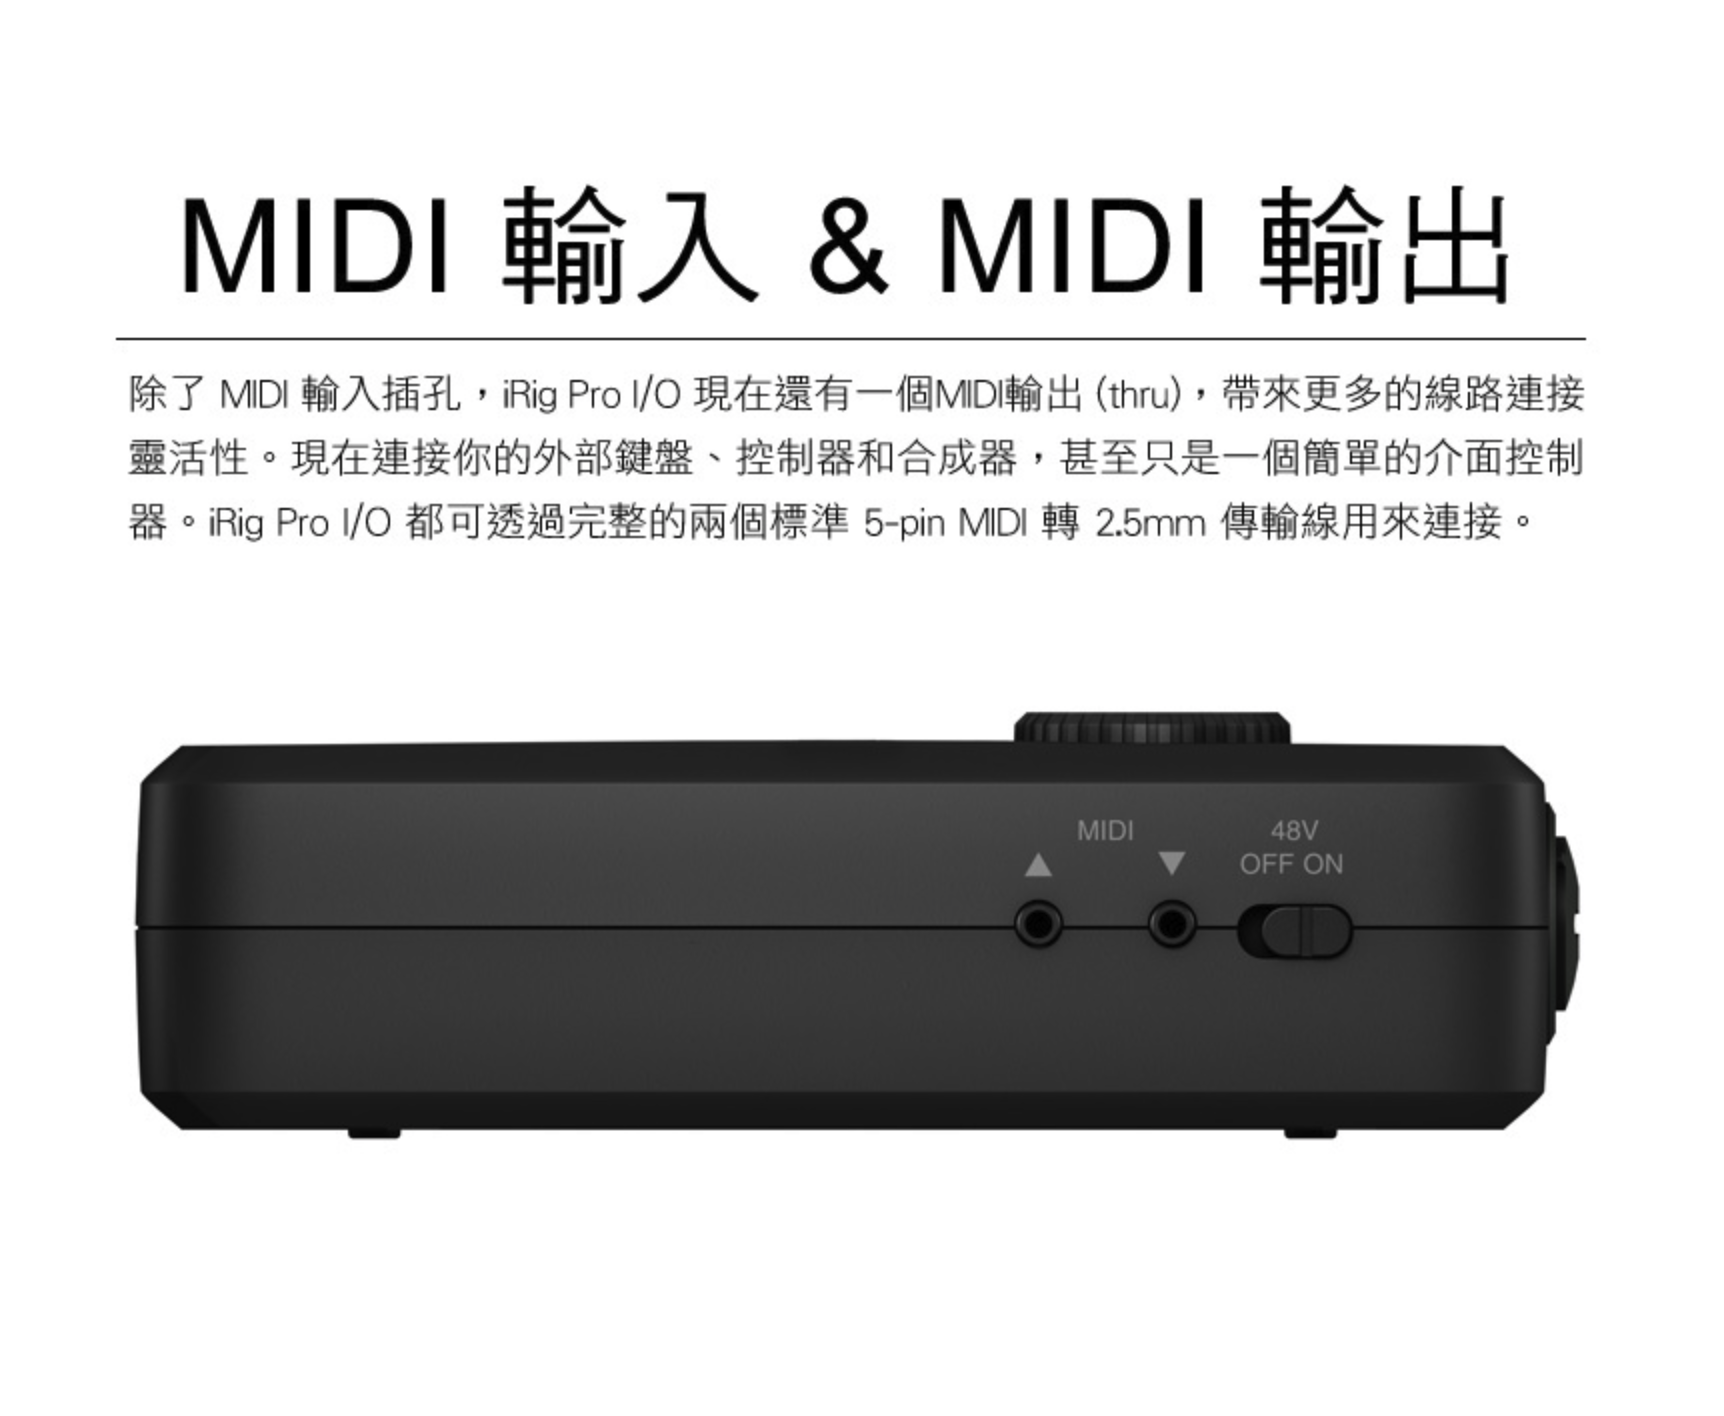 IK Multimedia iRig Pro I/O 適用 IOS/ADR/MAC/PC 行動 錄音介面 | 金曲音響